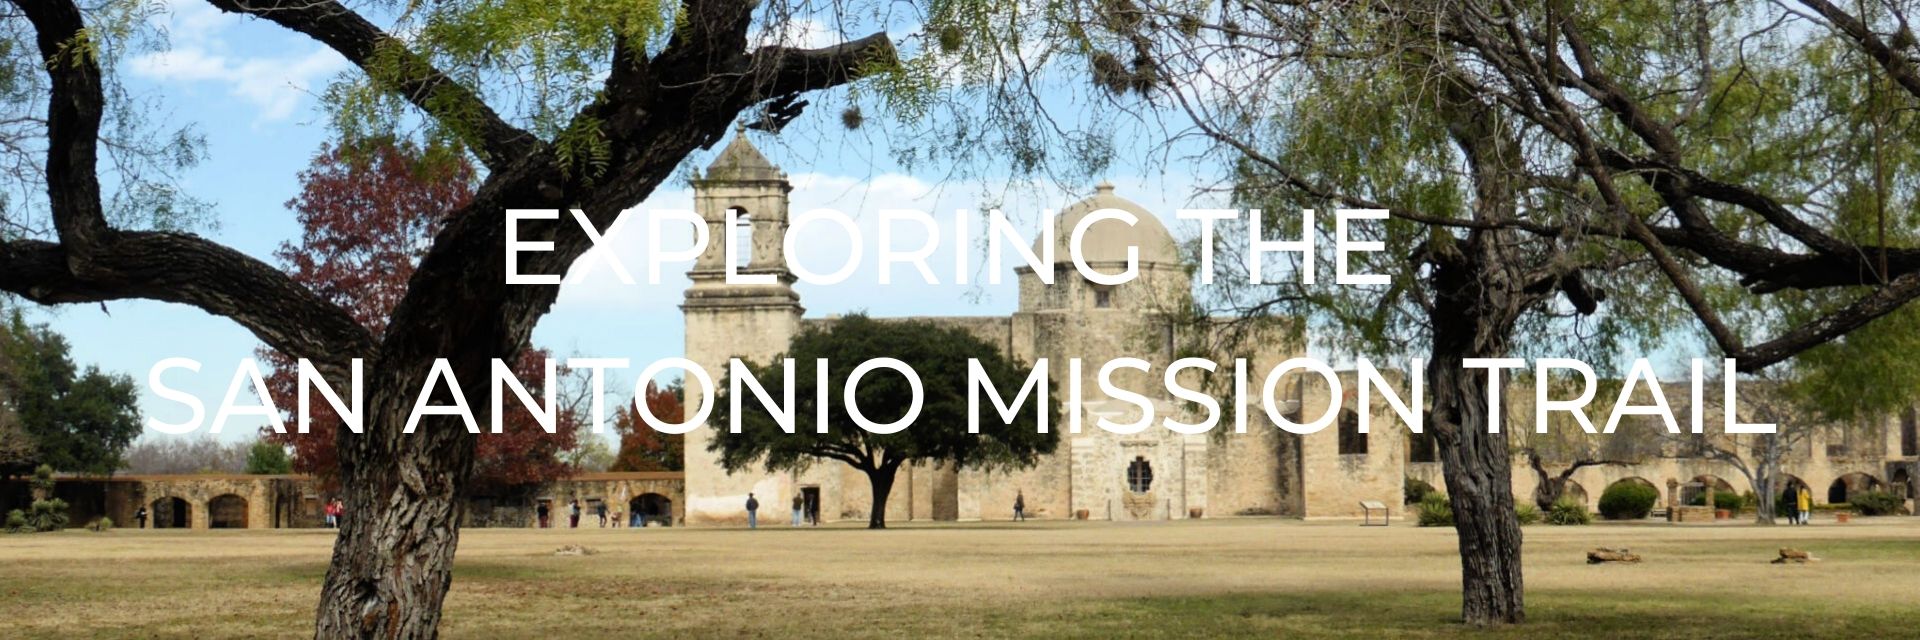 Exploring San Antonio, Texas Mission Trail Desktop Header